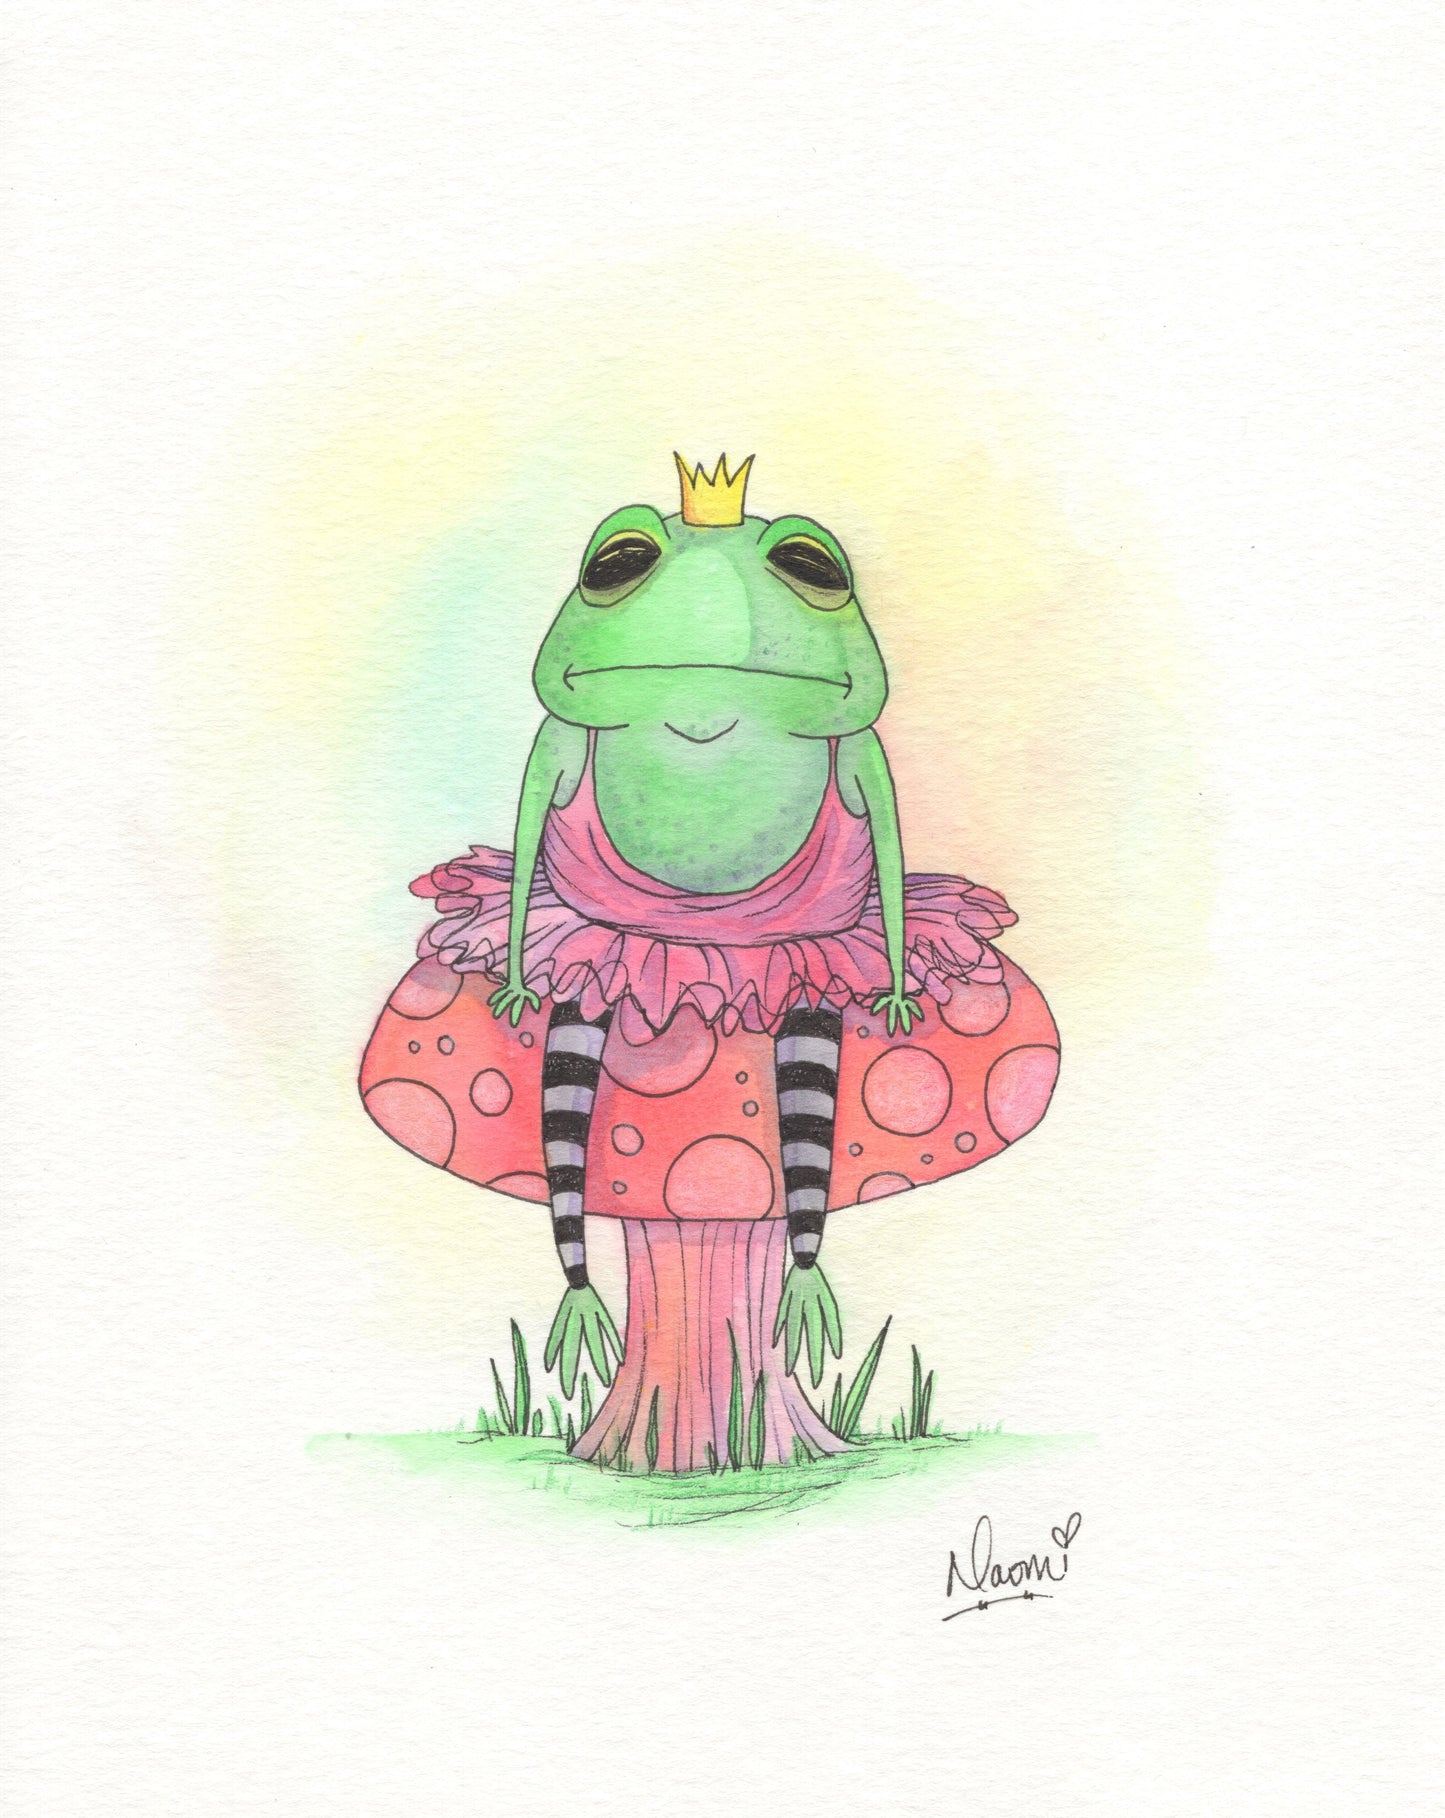 Le Frog Prince